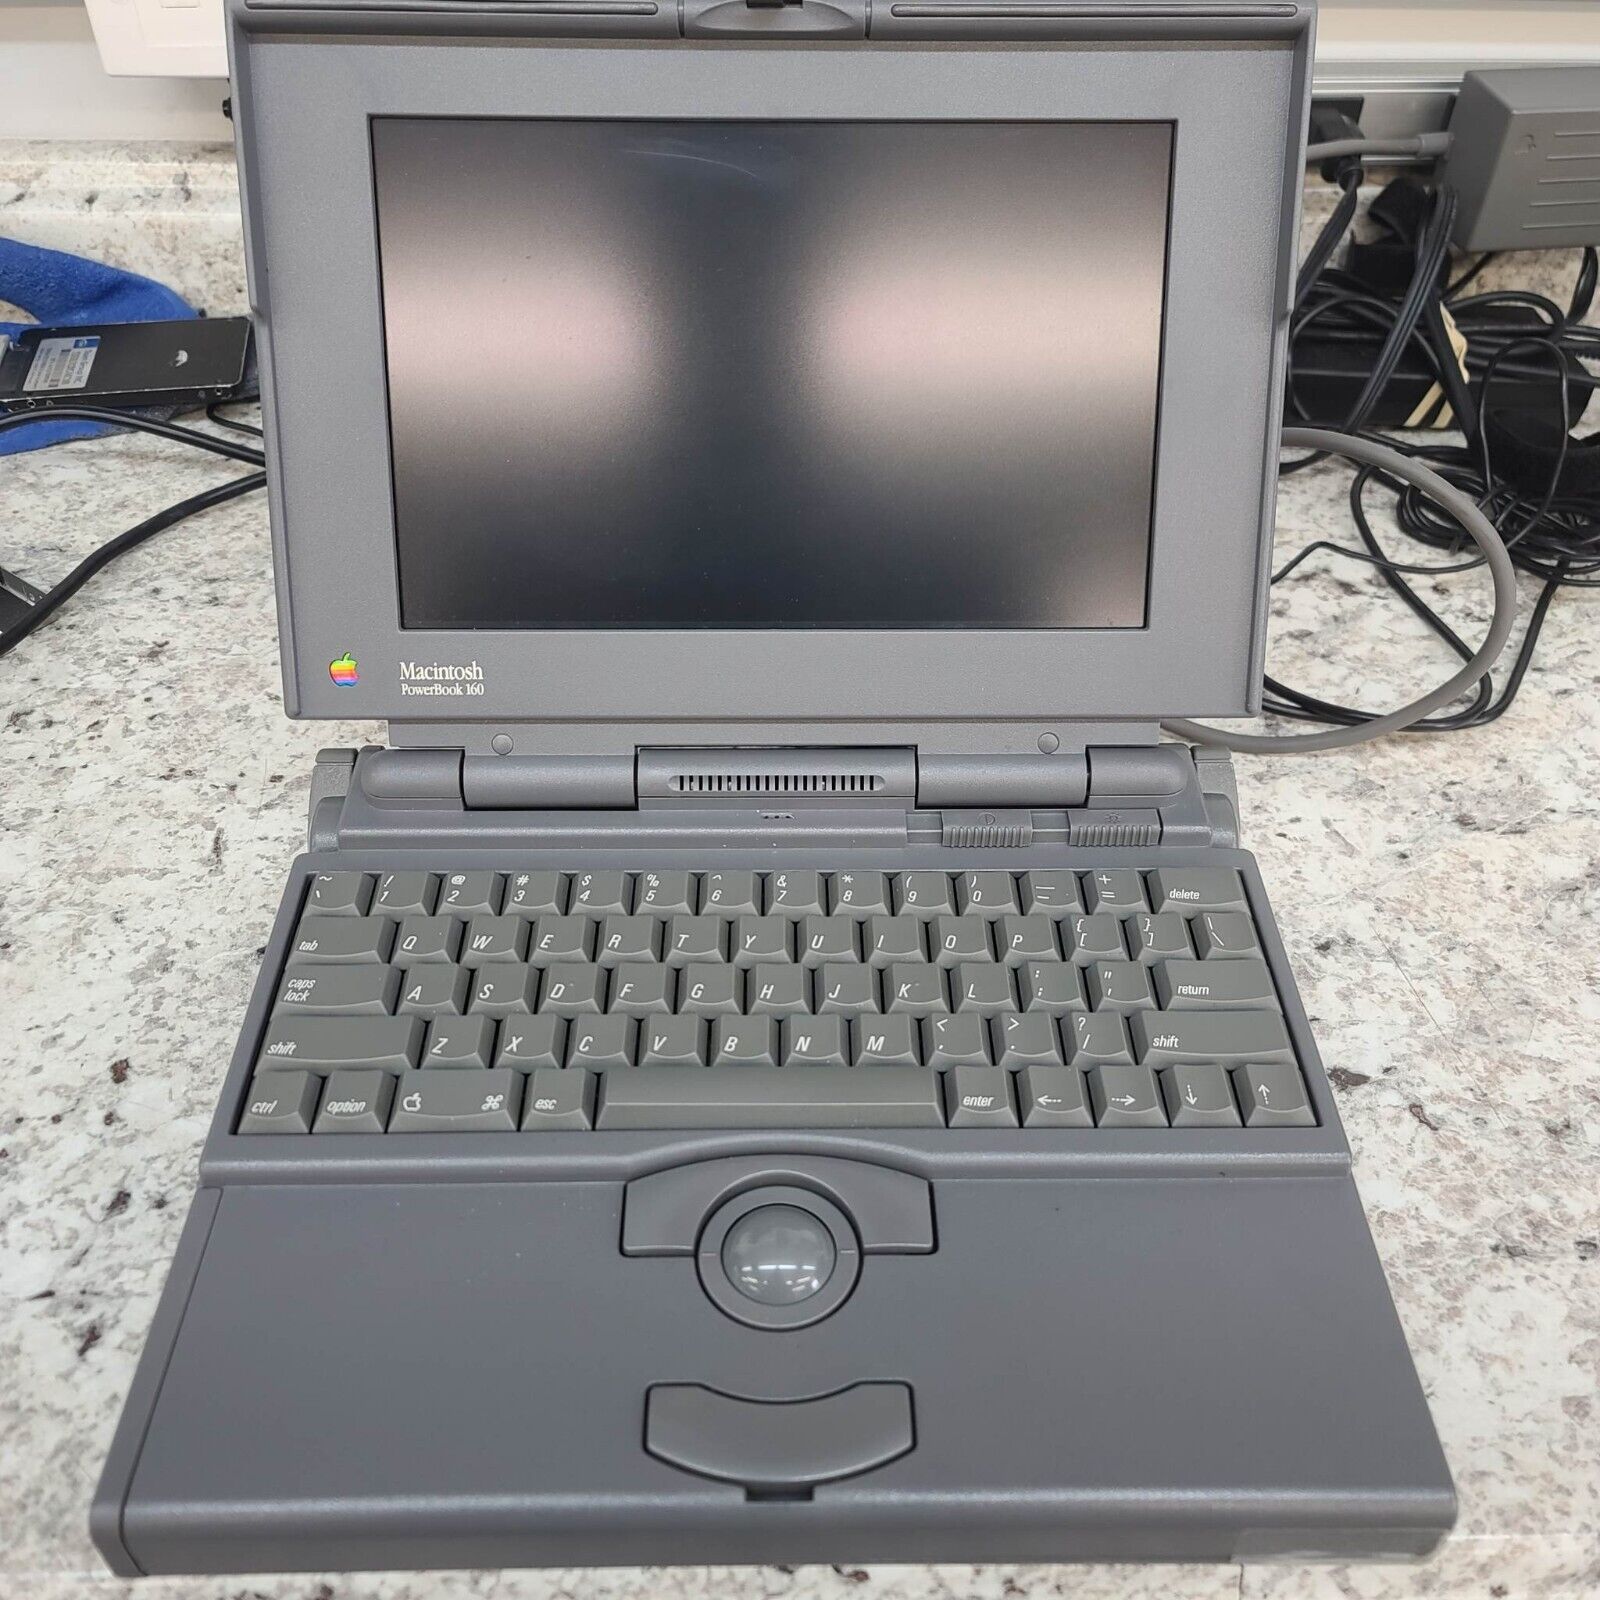 Retro Vintage Apple Macintosh PowerBook 160 Laptop Computer M4550 - Clean